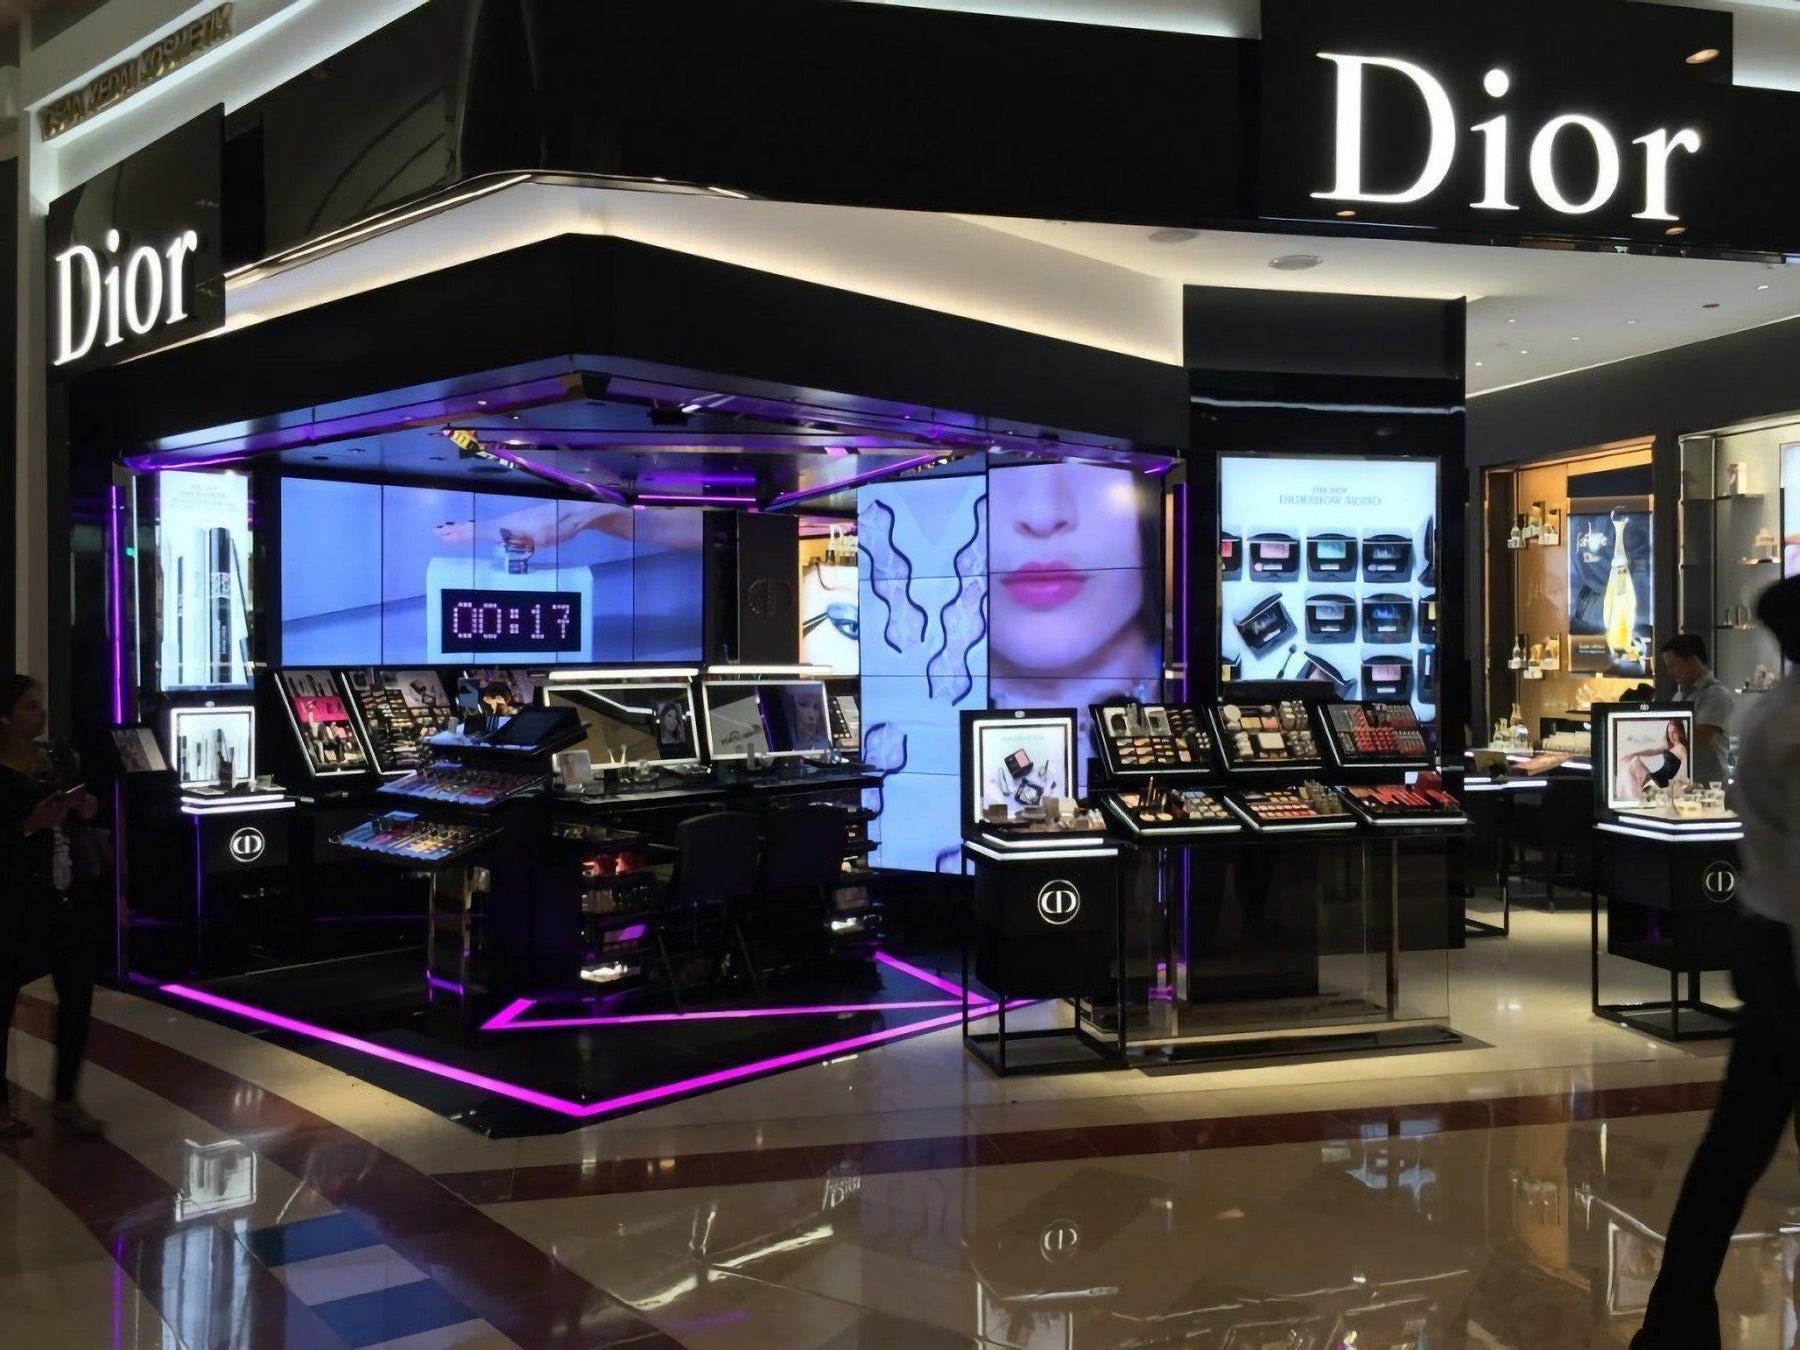 Dior Backstage Studio on the Concourse Floor of Suria KLCC - M2 Retail